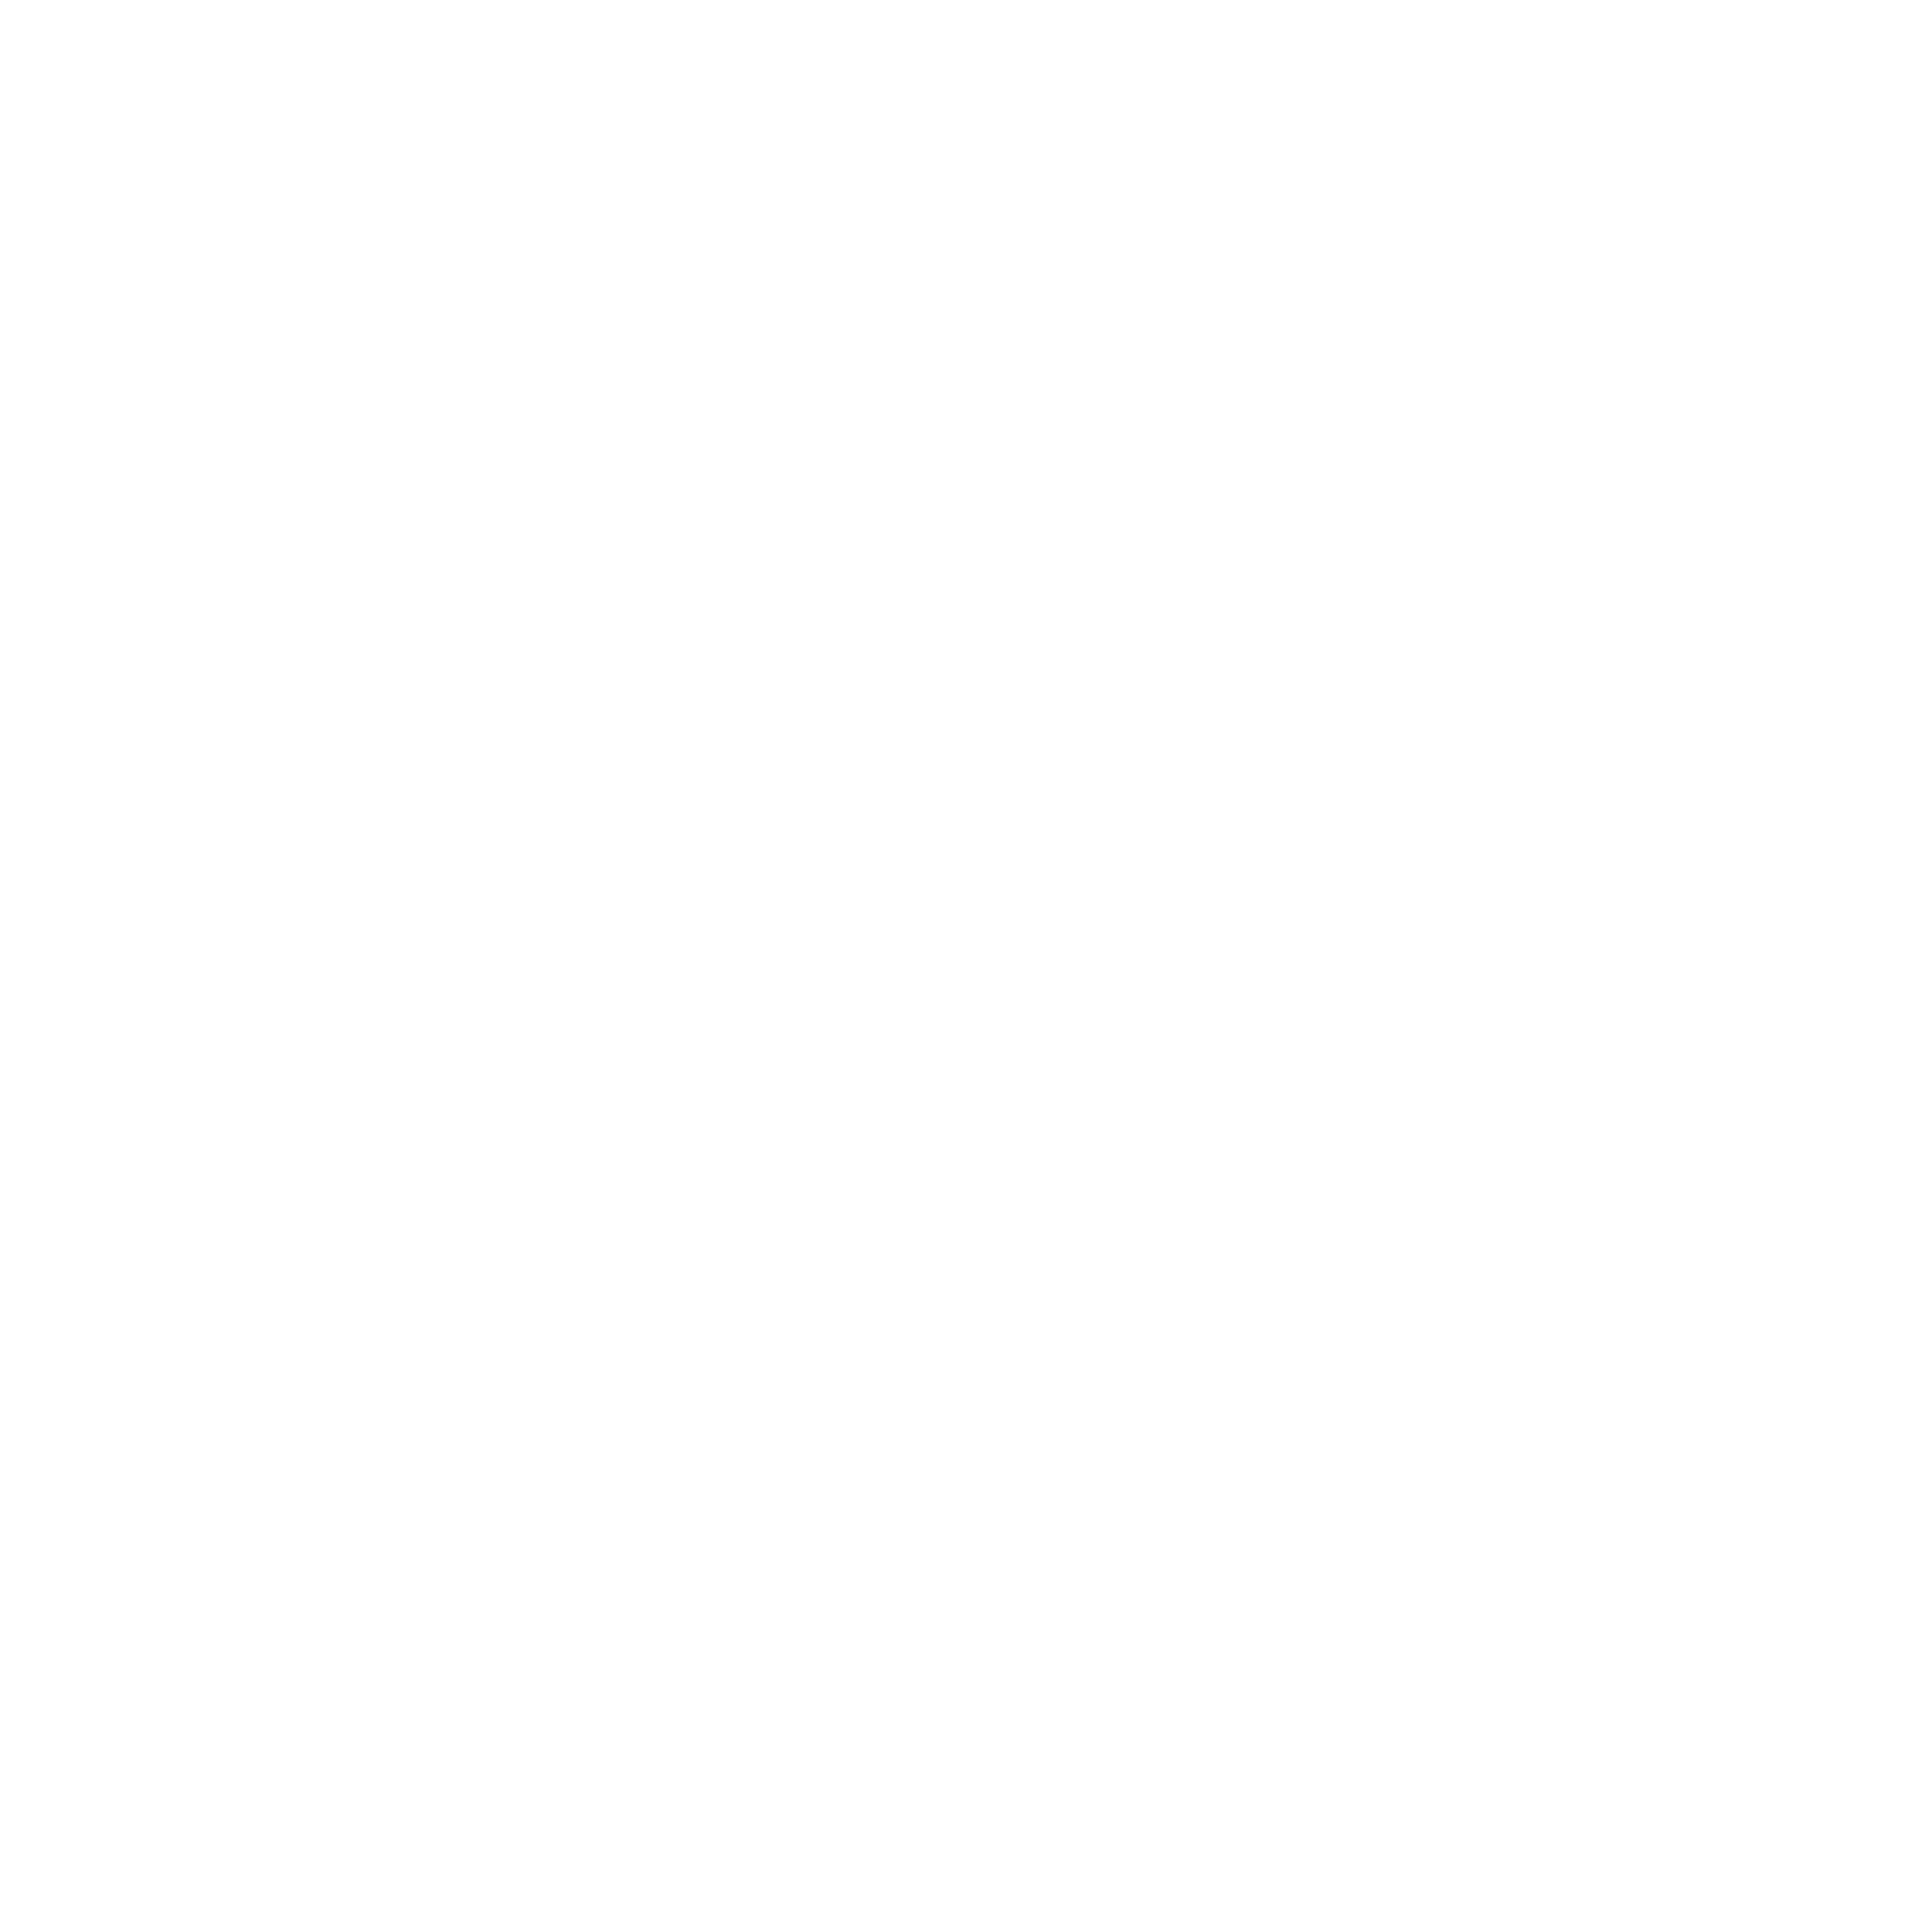 REMAX_Logo